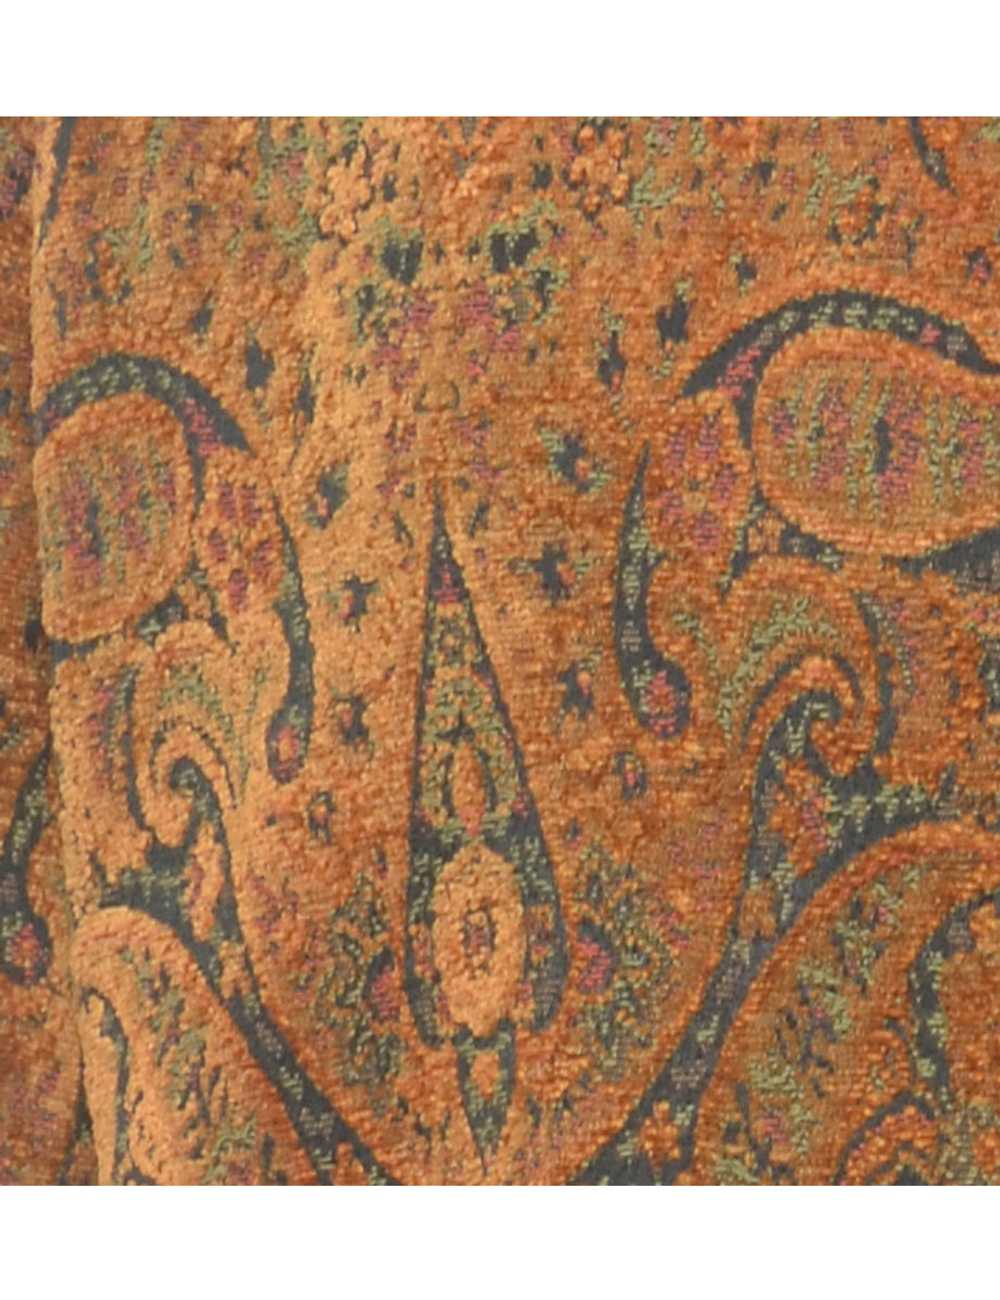 Paisley Print Tapestry Jacket - M - image 3